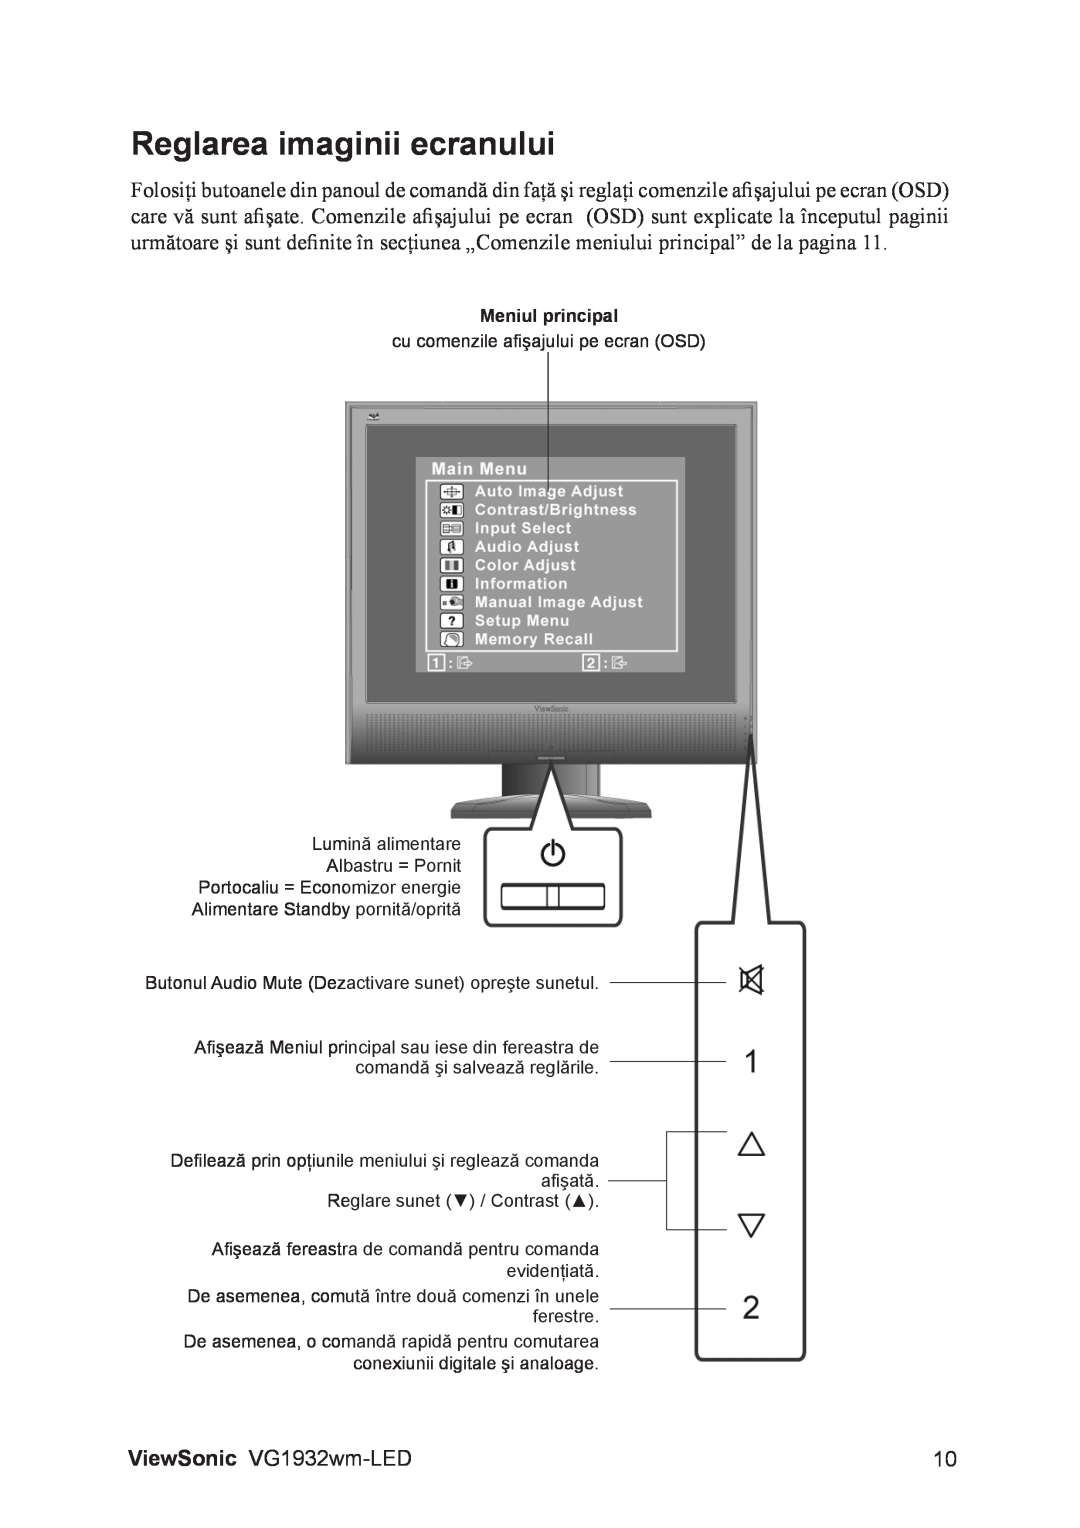 ViewSonic VG1932WM-LED manual Reglarea imaginii ecranului, ViewSonic VG1932wm-LED 